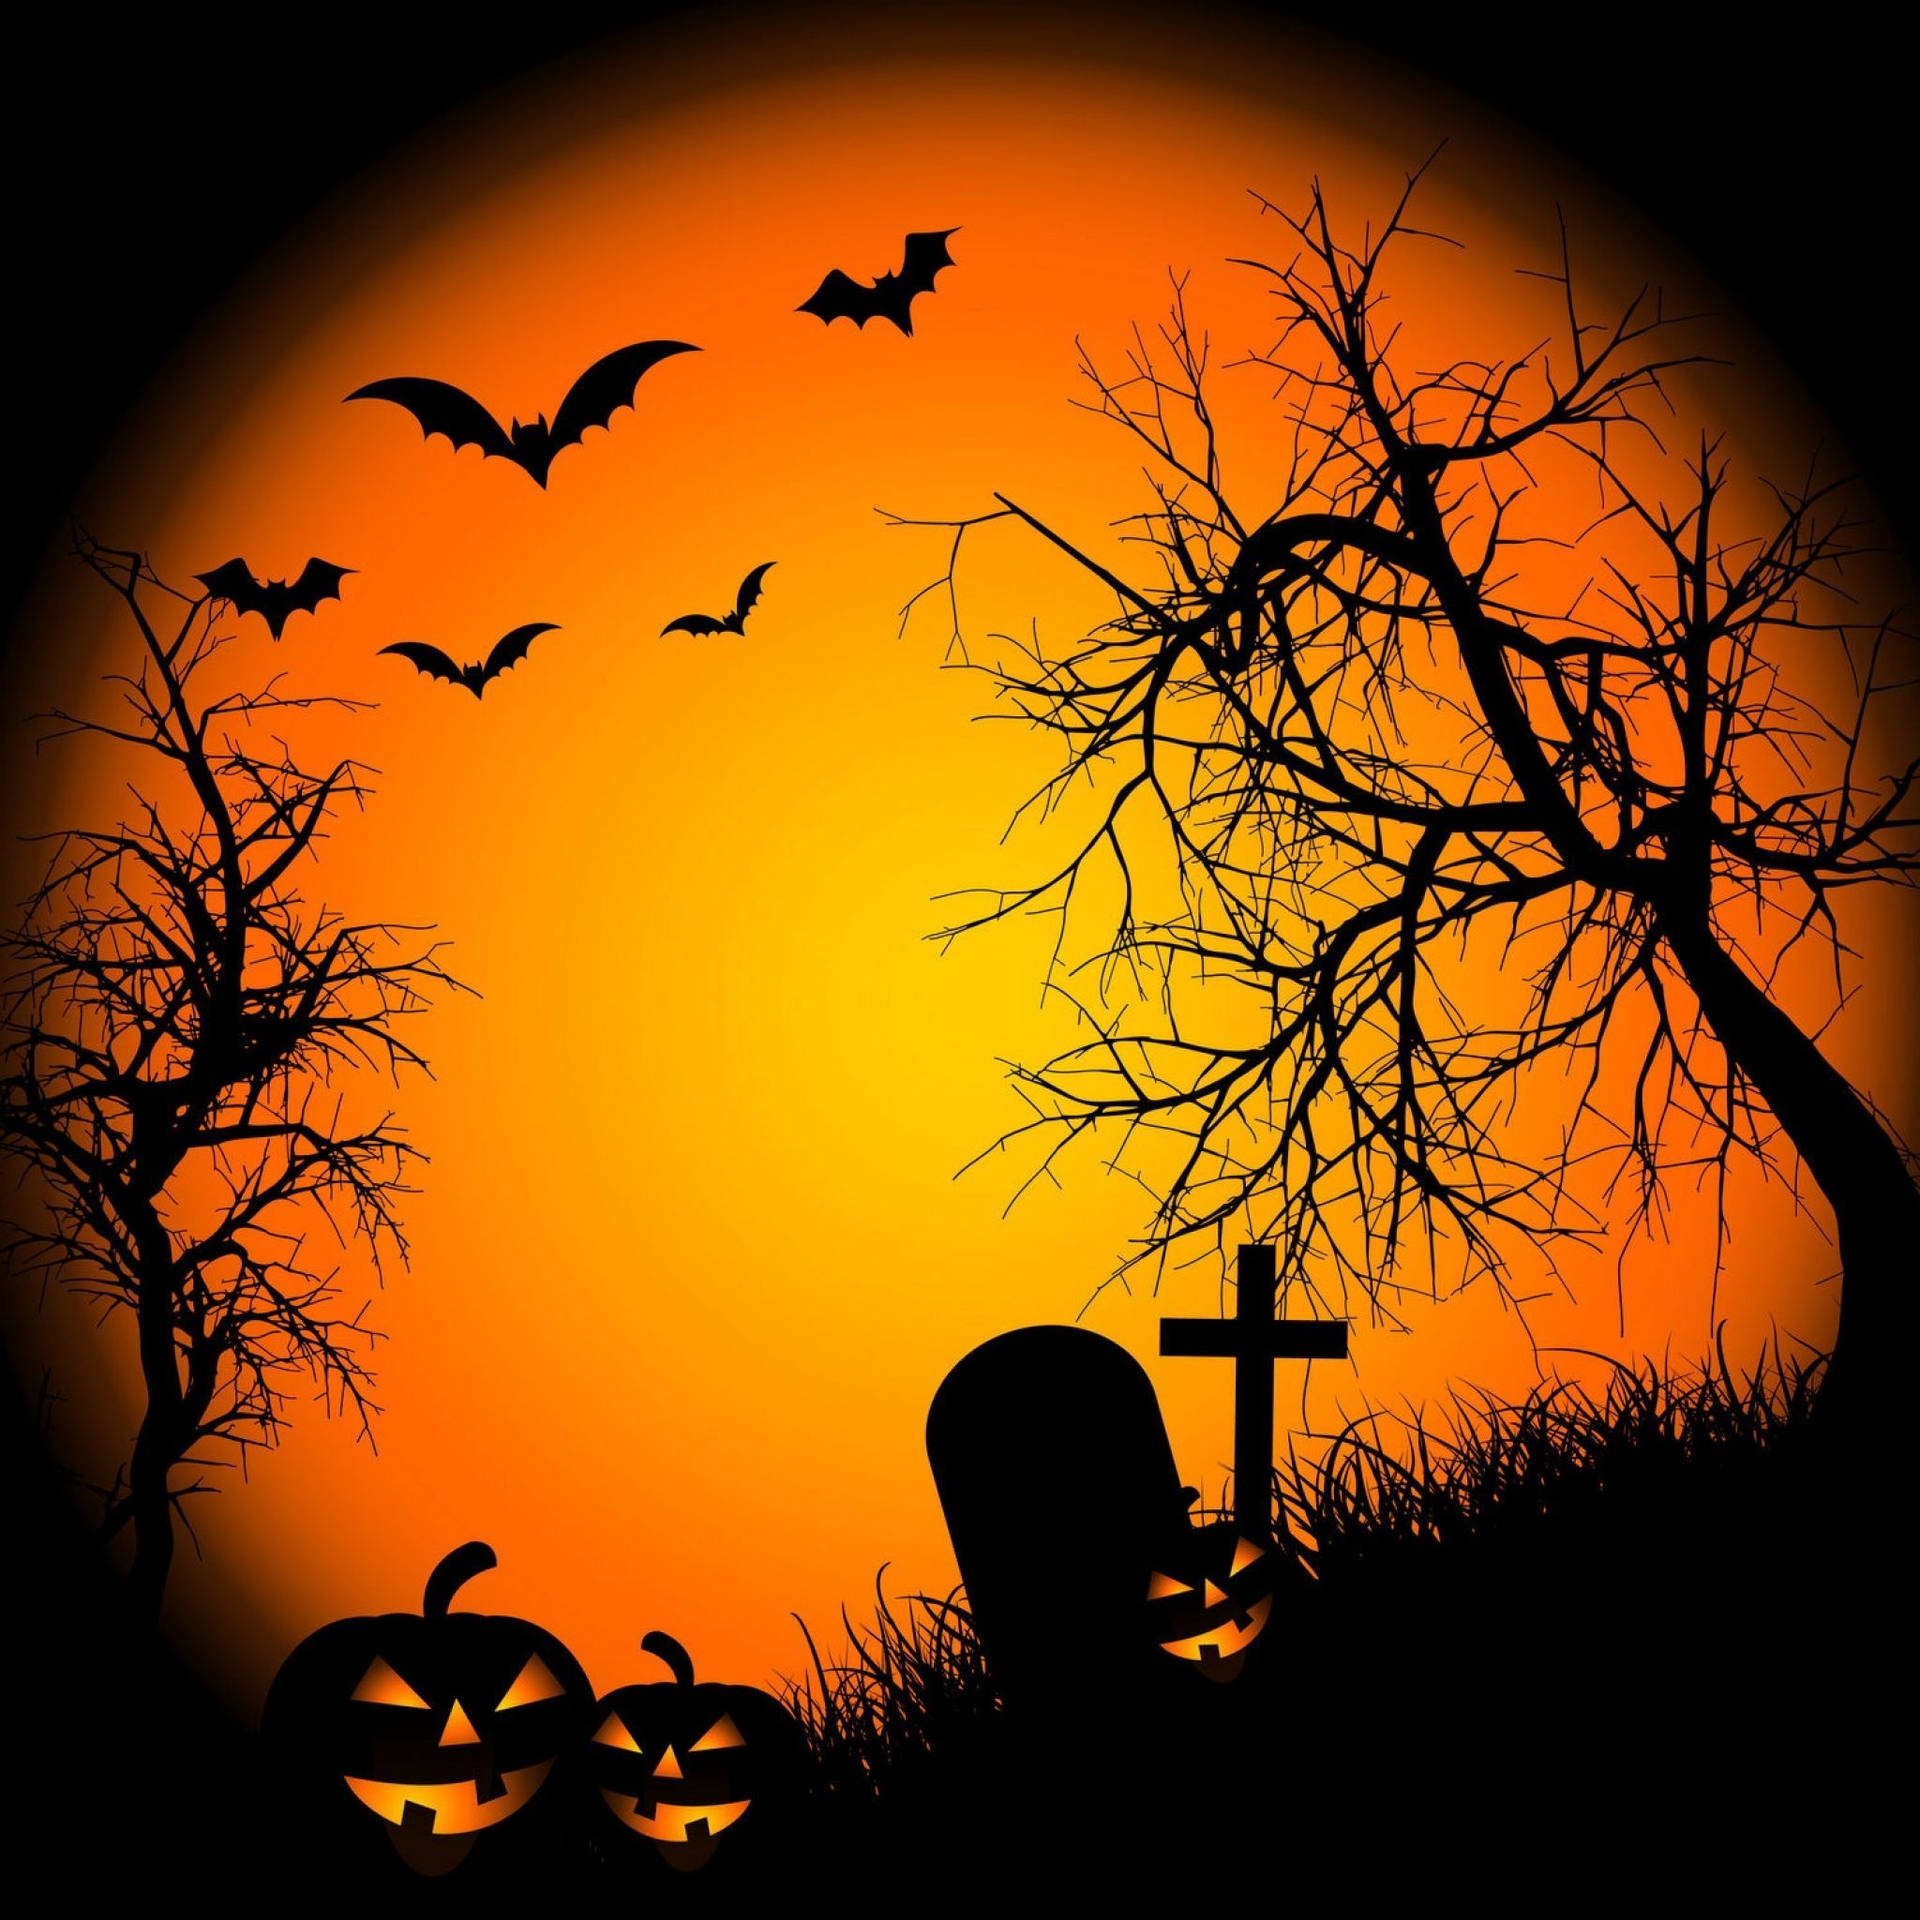 Enjoy the spooky season with this Halloween iPad wallpaper! Wallpaper